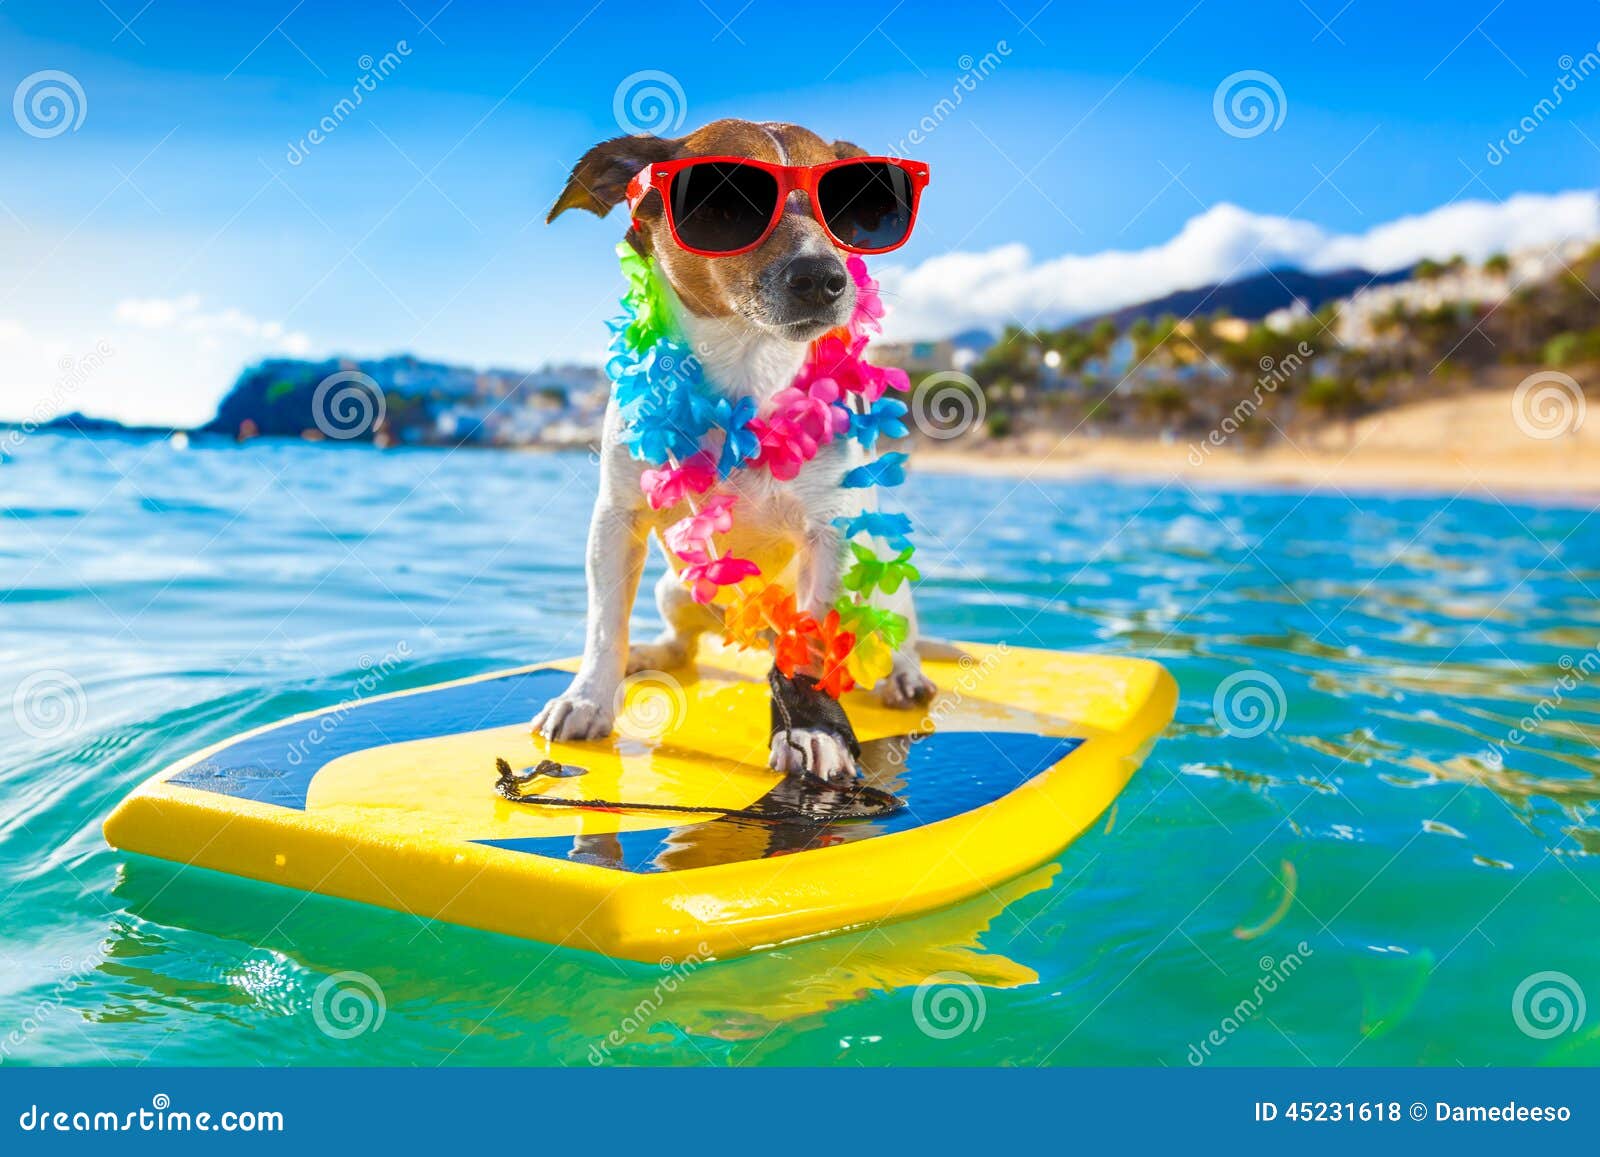 surfing dog surfboard wearing flower chain sunglasses ocean shore 45231618